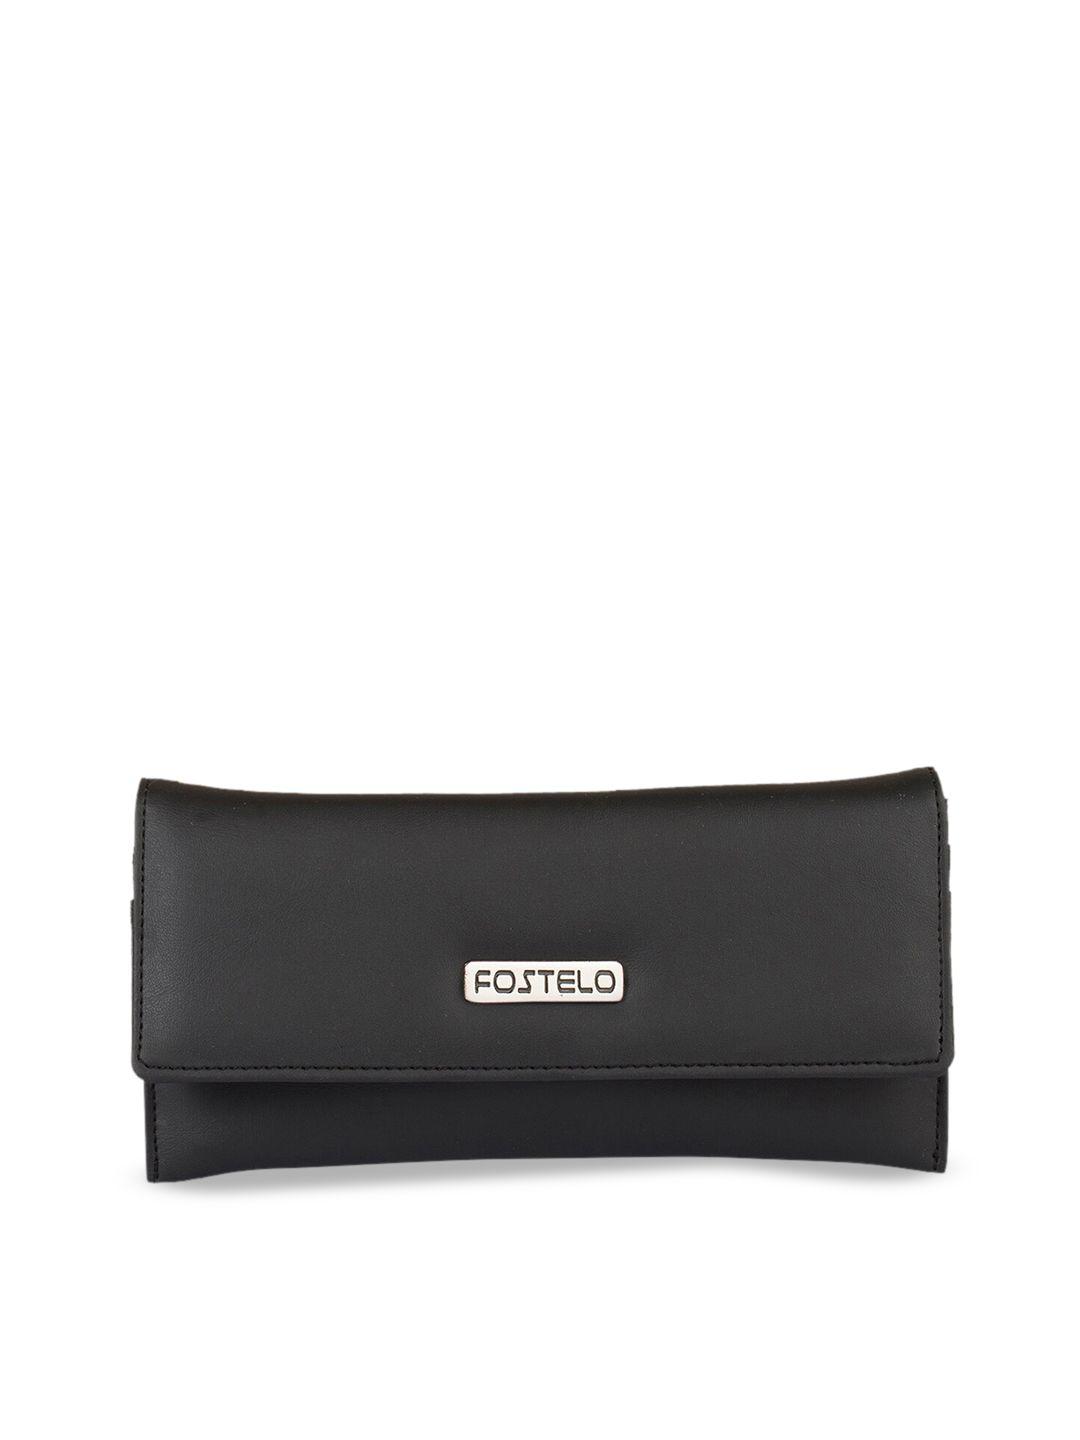 fostelo black solid purse clutch